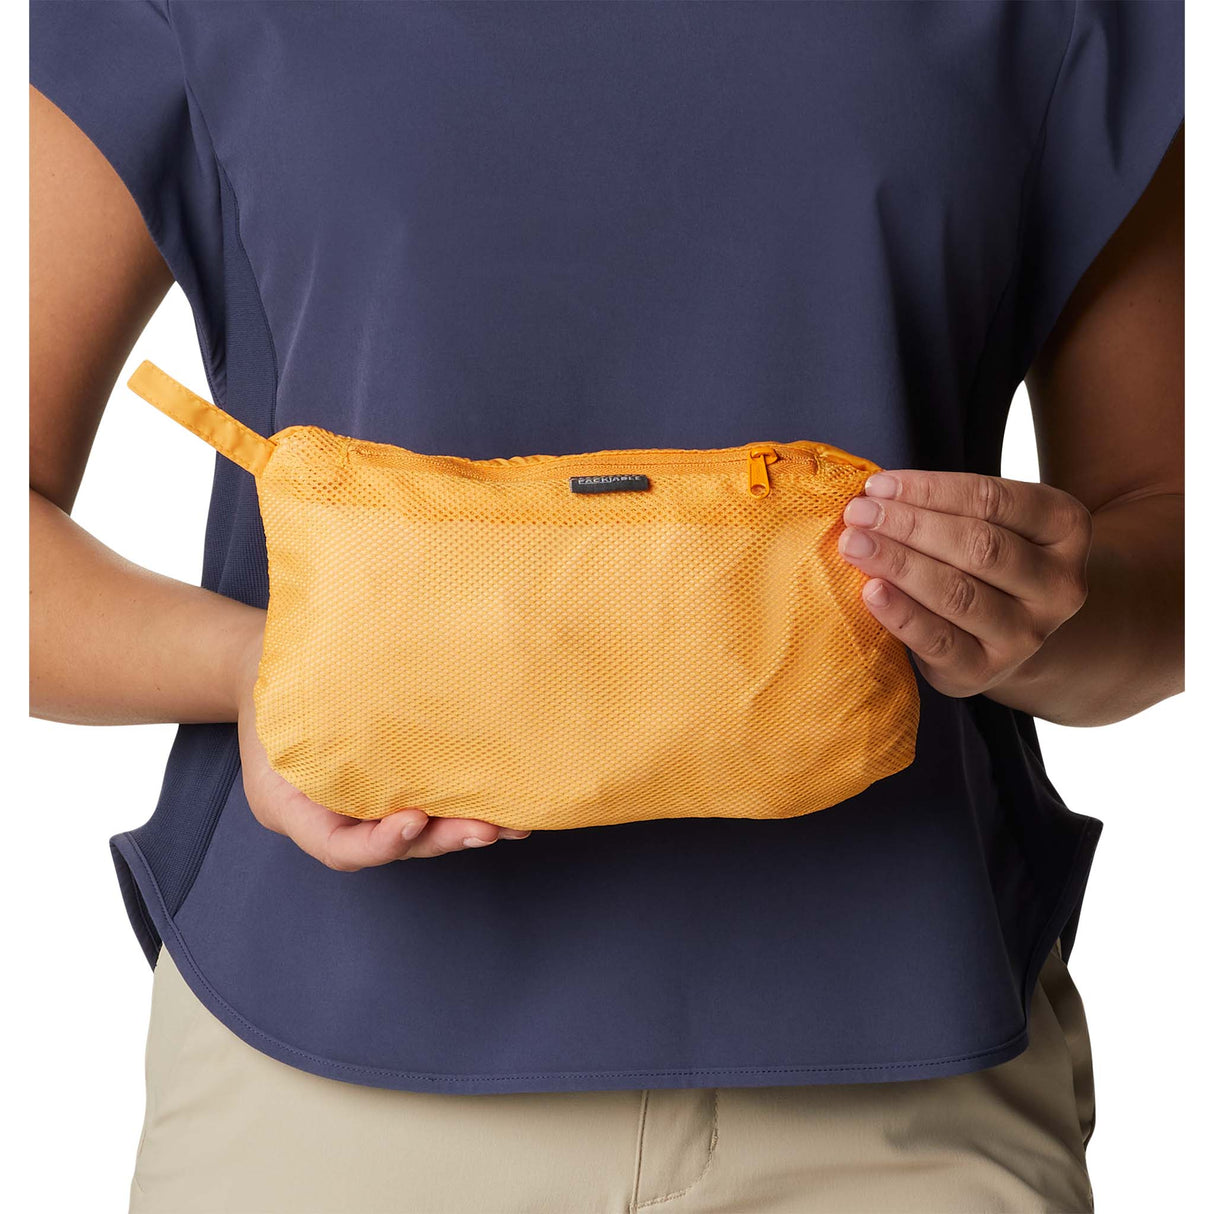 Columbia Switchback III manteau coquille mango pour femme sac de transport